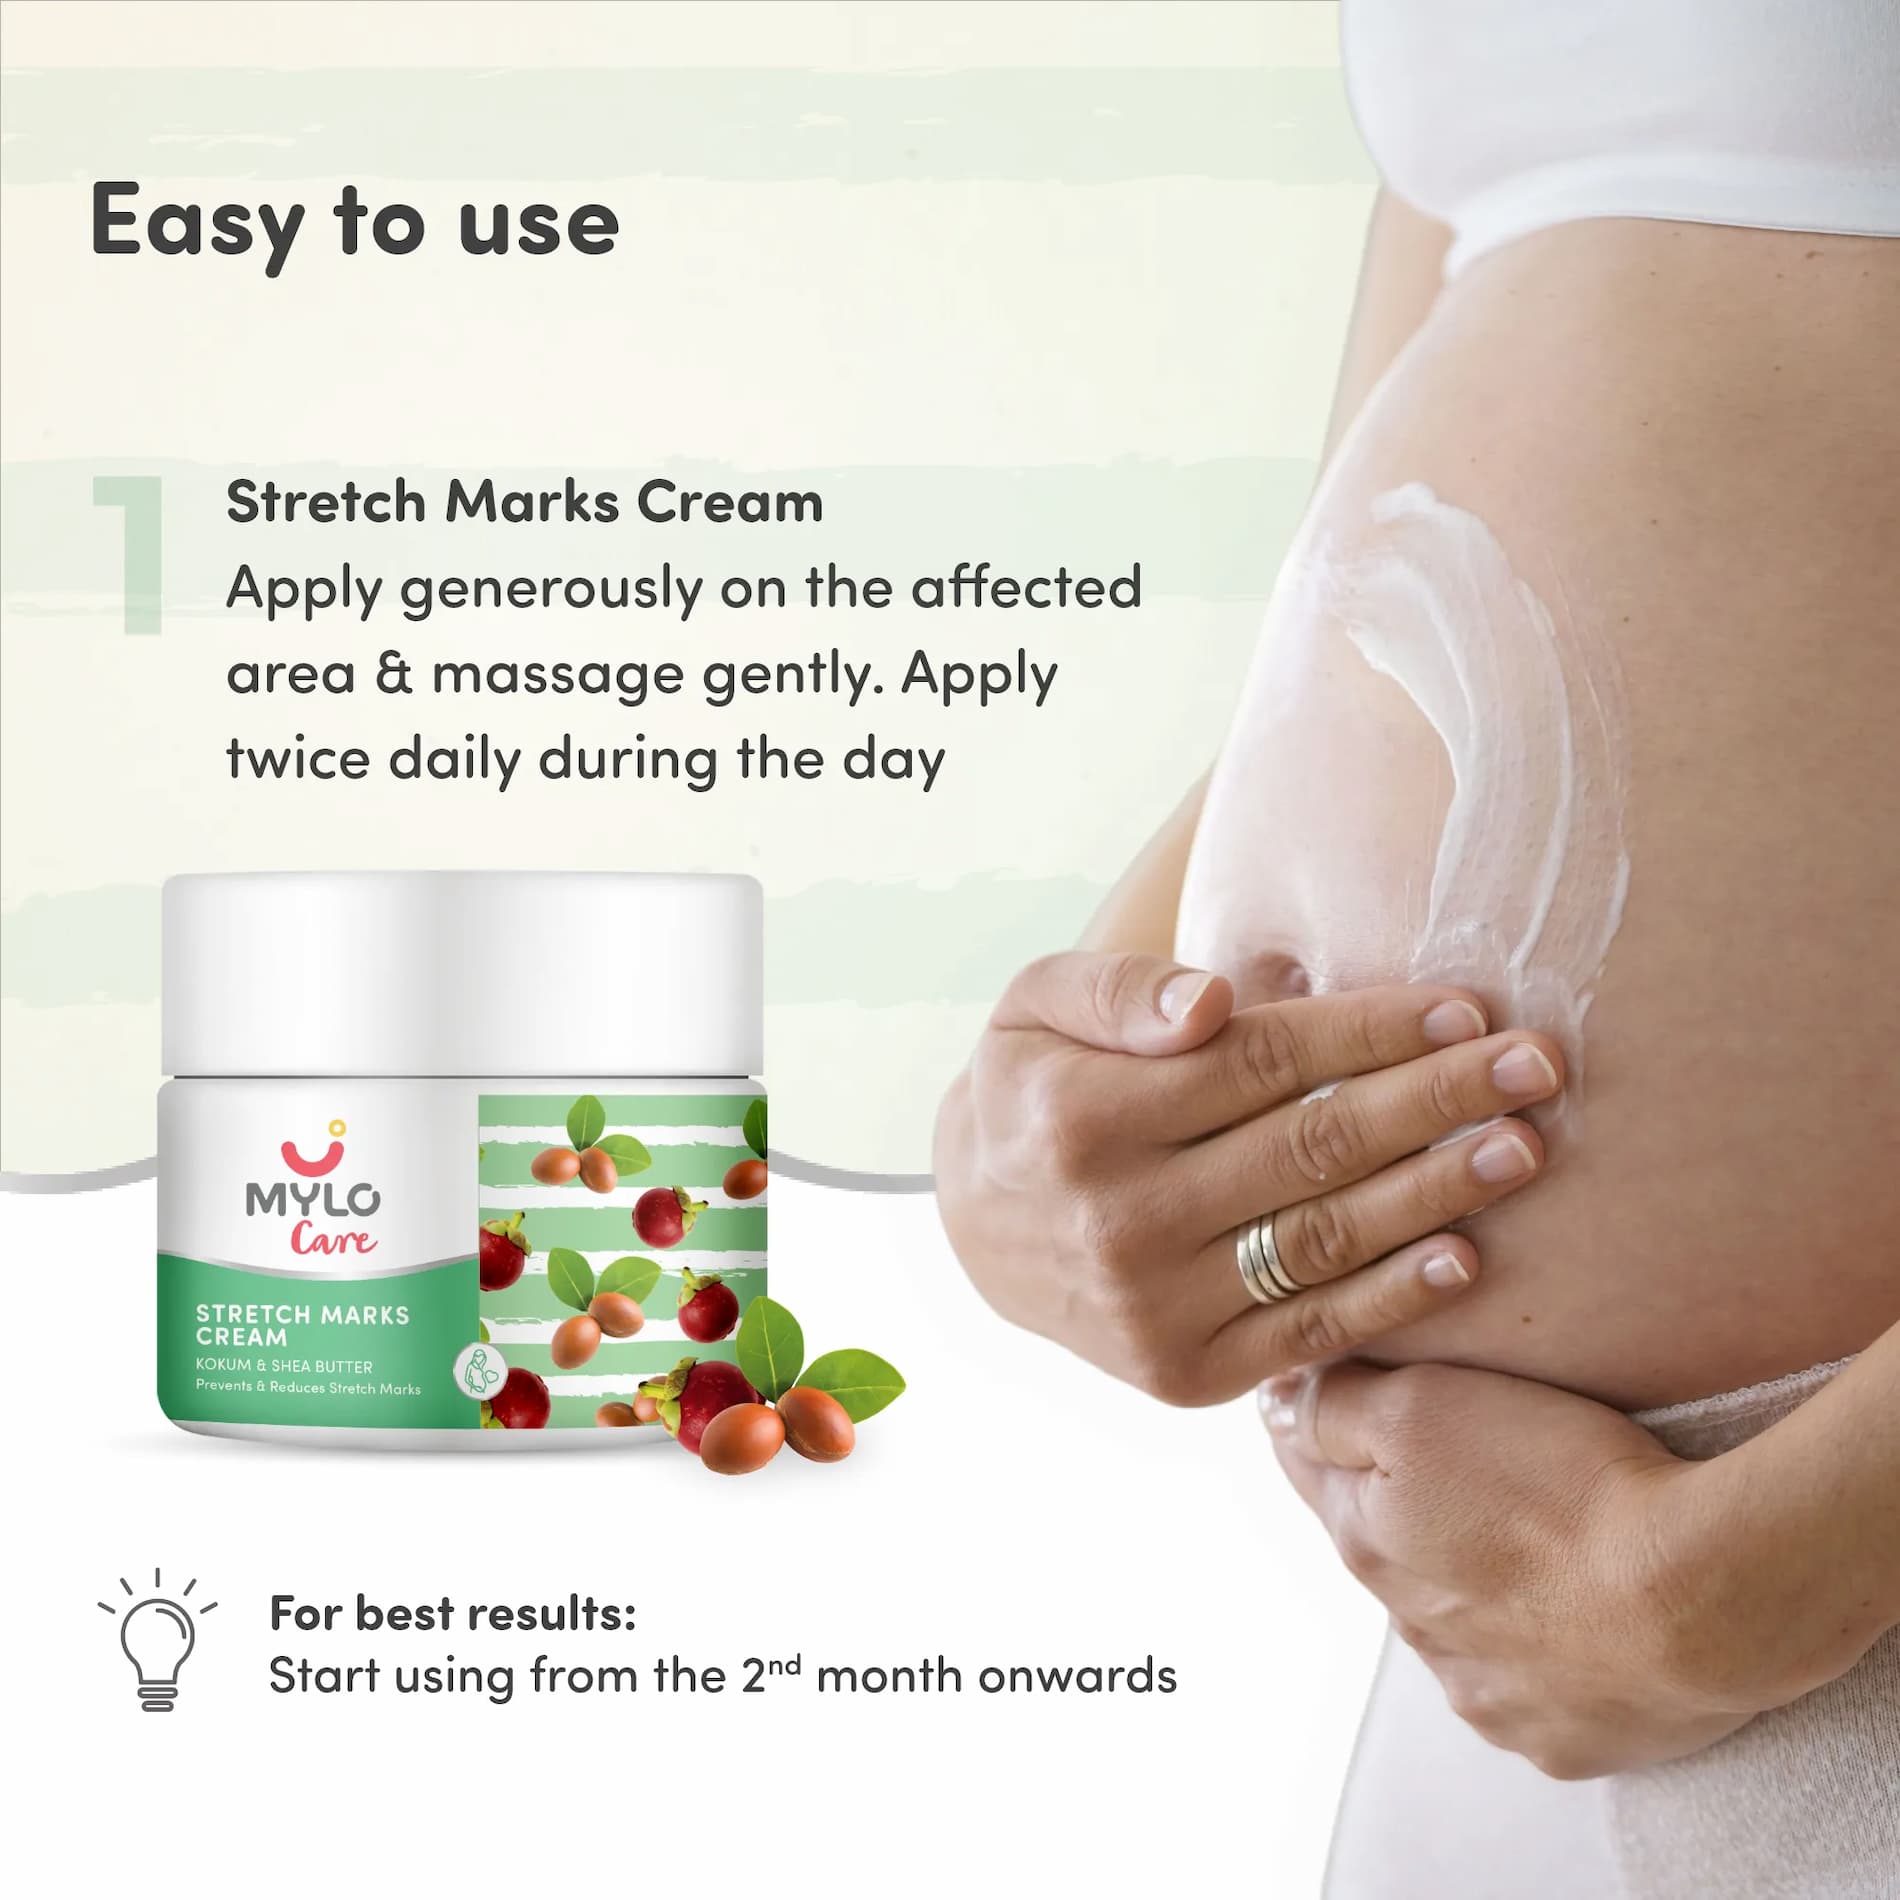 Pregnancy Wellness Super Saver Combo - Stretch Marks Cream for Women 100g + Long Grain Pure Saffron for Pregnant Women (Kesar) - 2g